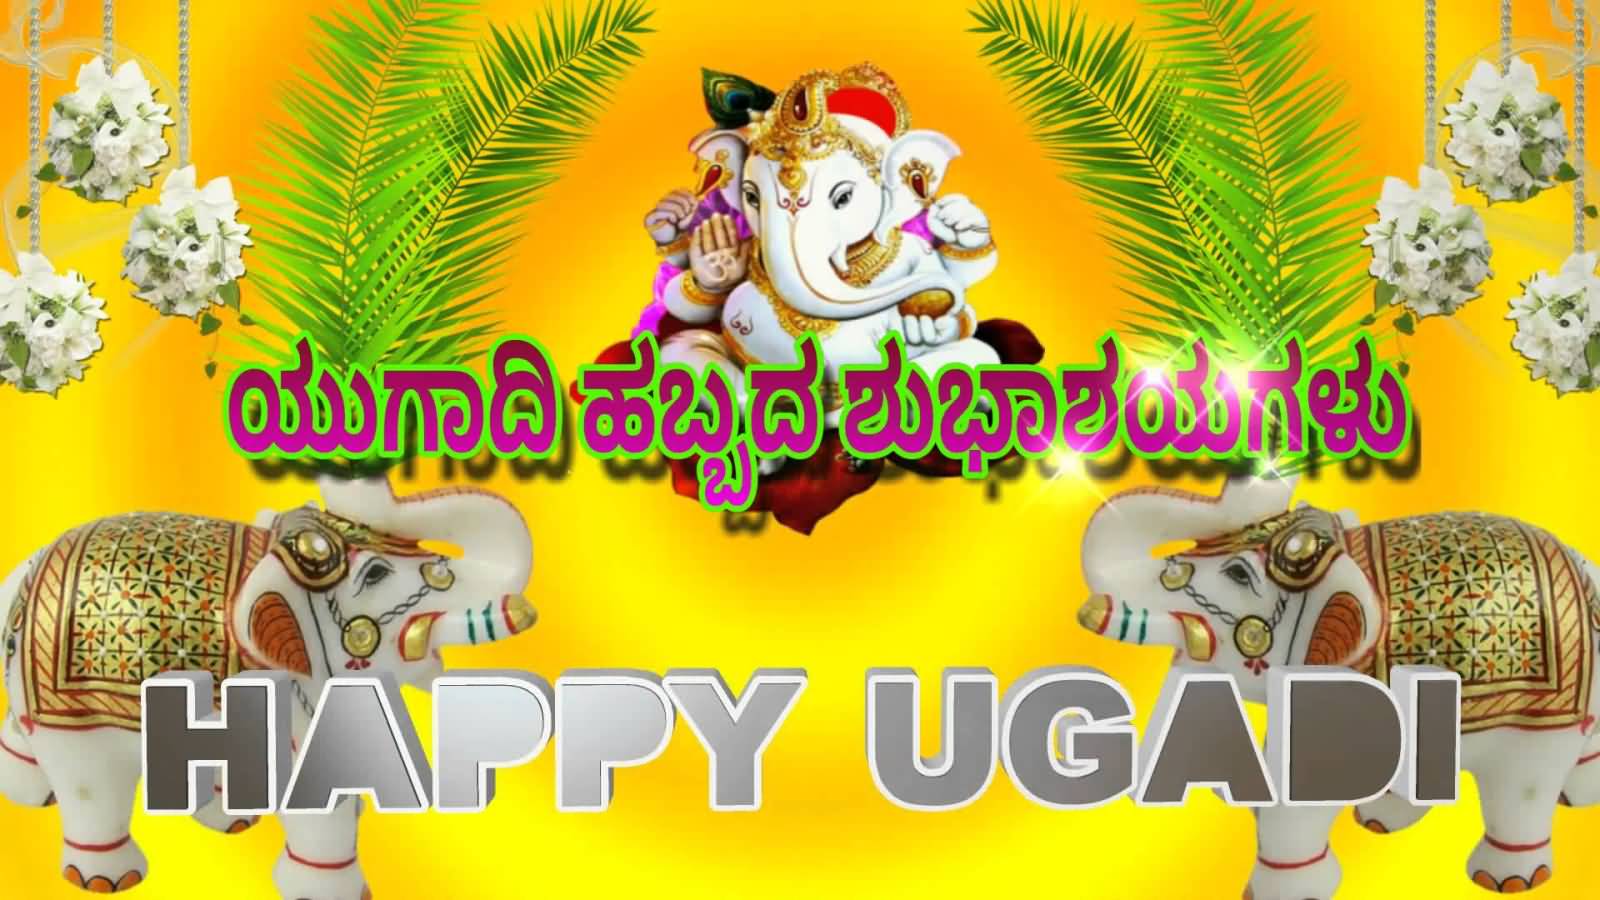 Happy Ugadi Greetings In Kannada - Ugadi Images In Kannada ...